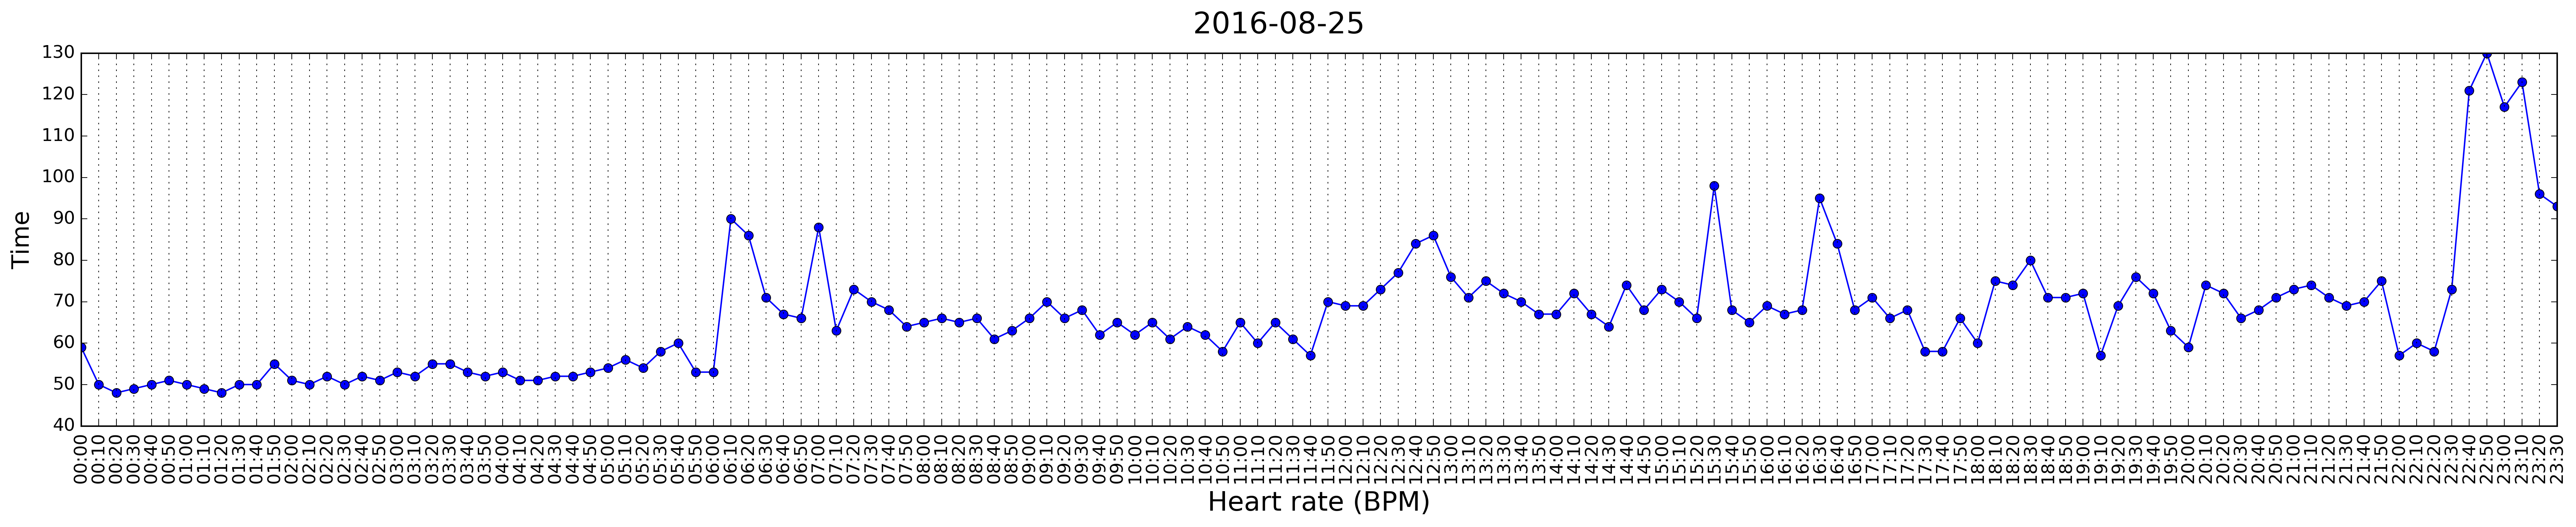 2016-08-25-heart